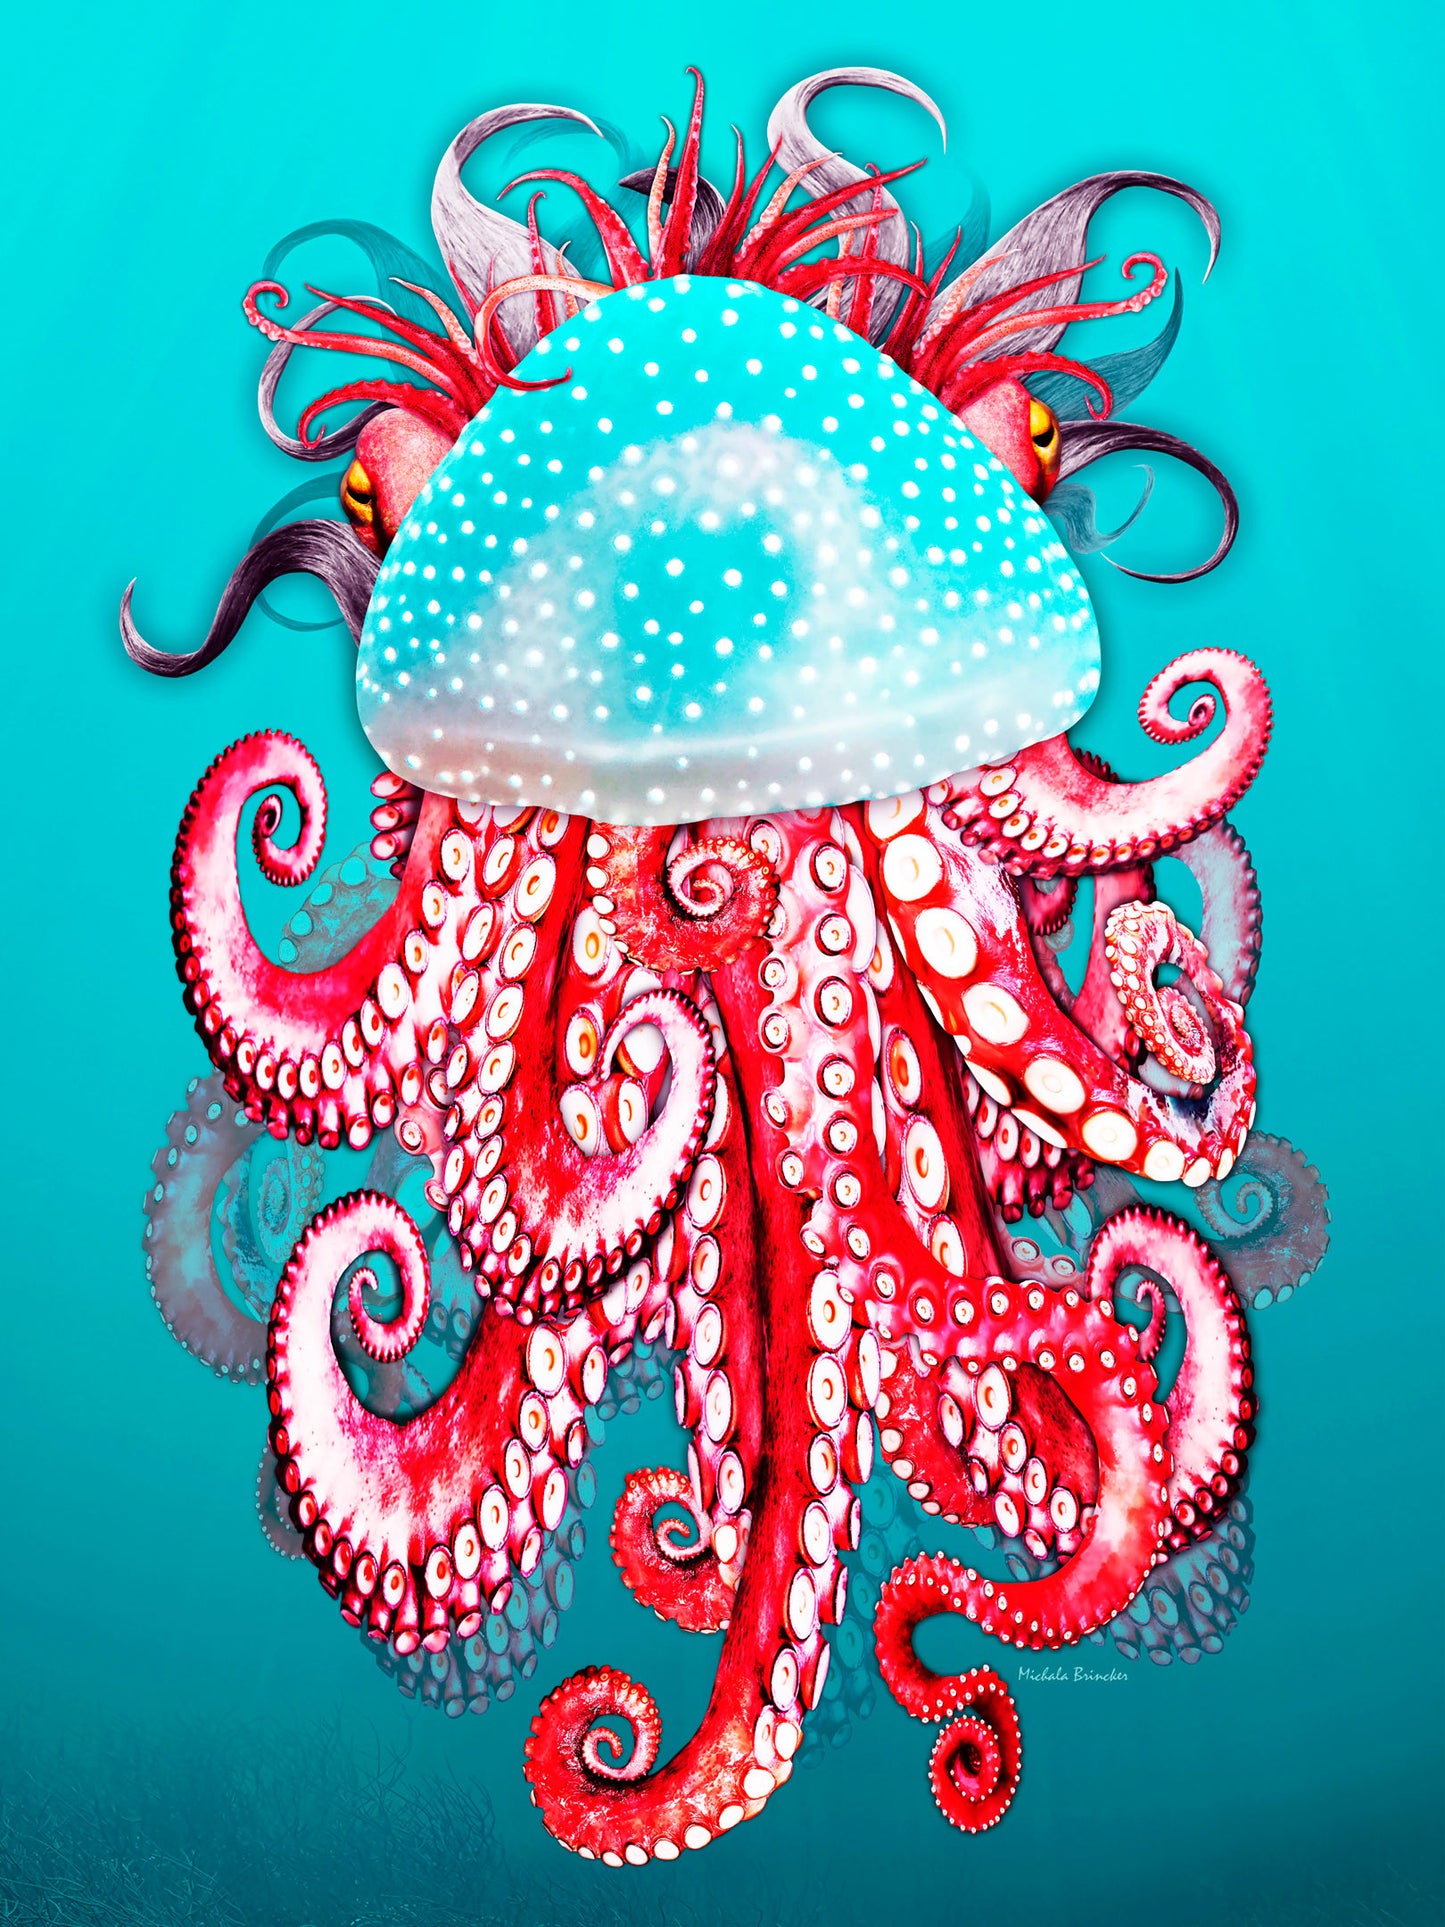 Octopus Jellyfish - OCTOPUS ARTWORK - Edition of 10